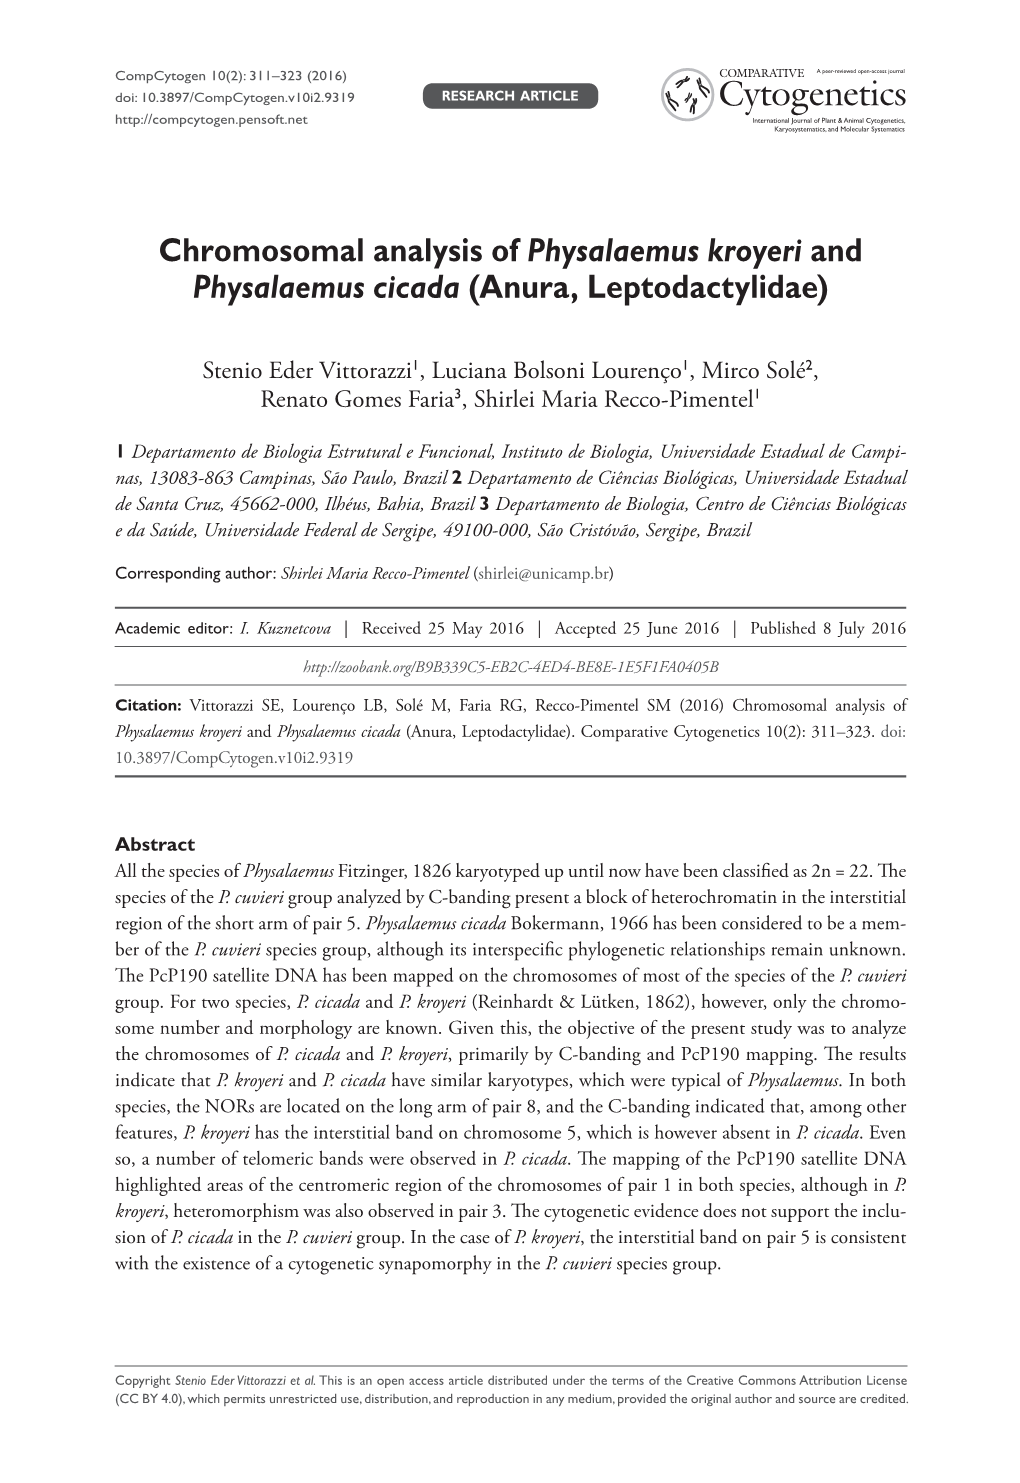 Chromosomal Analysis of Physalaemus Kroyeri and Physalaemus Cicada (Anura, Leptodactylidae)